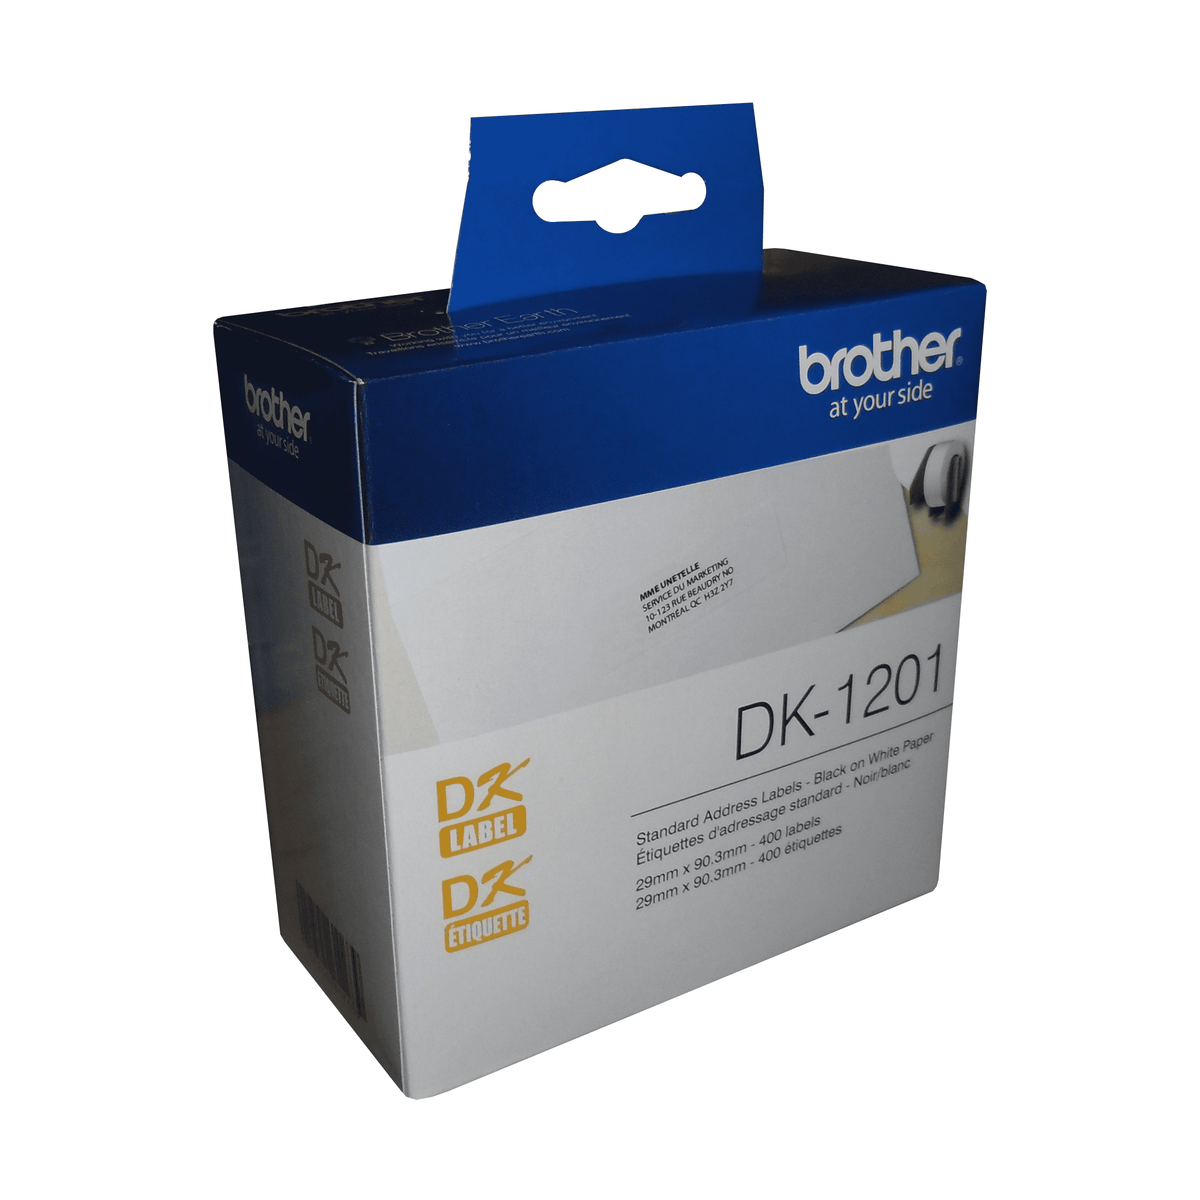 Brother DK-1201 Standard Address Paper Labels (400 labels) - 1.1" x 3.5" (29 mm x 90.3 mm)